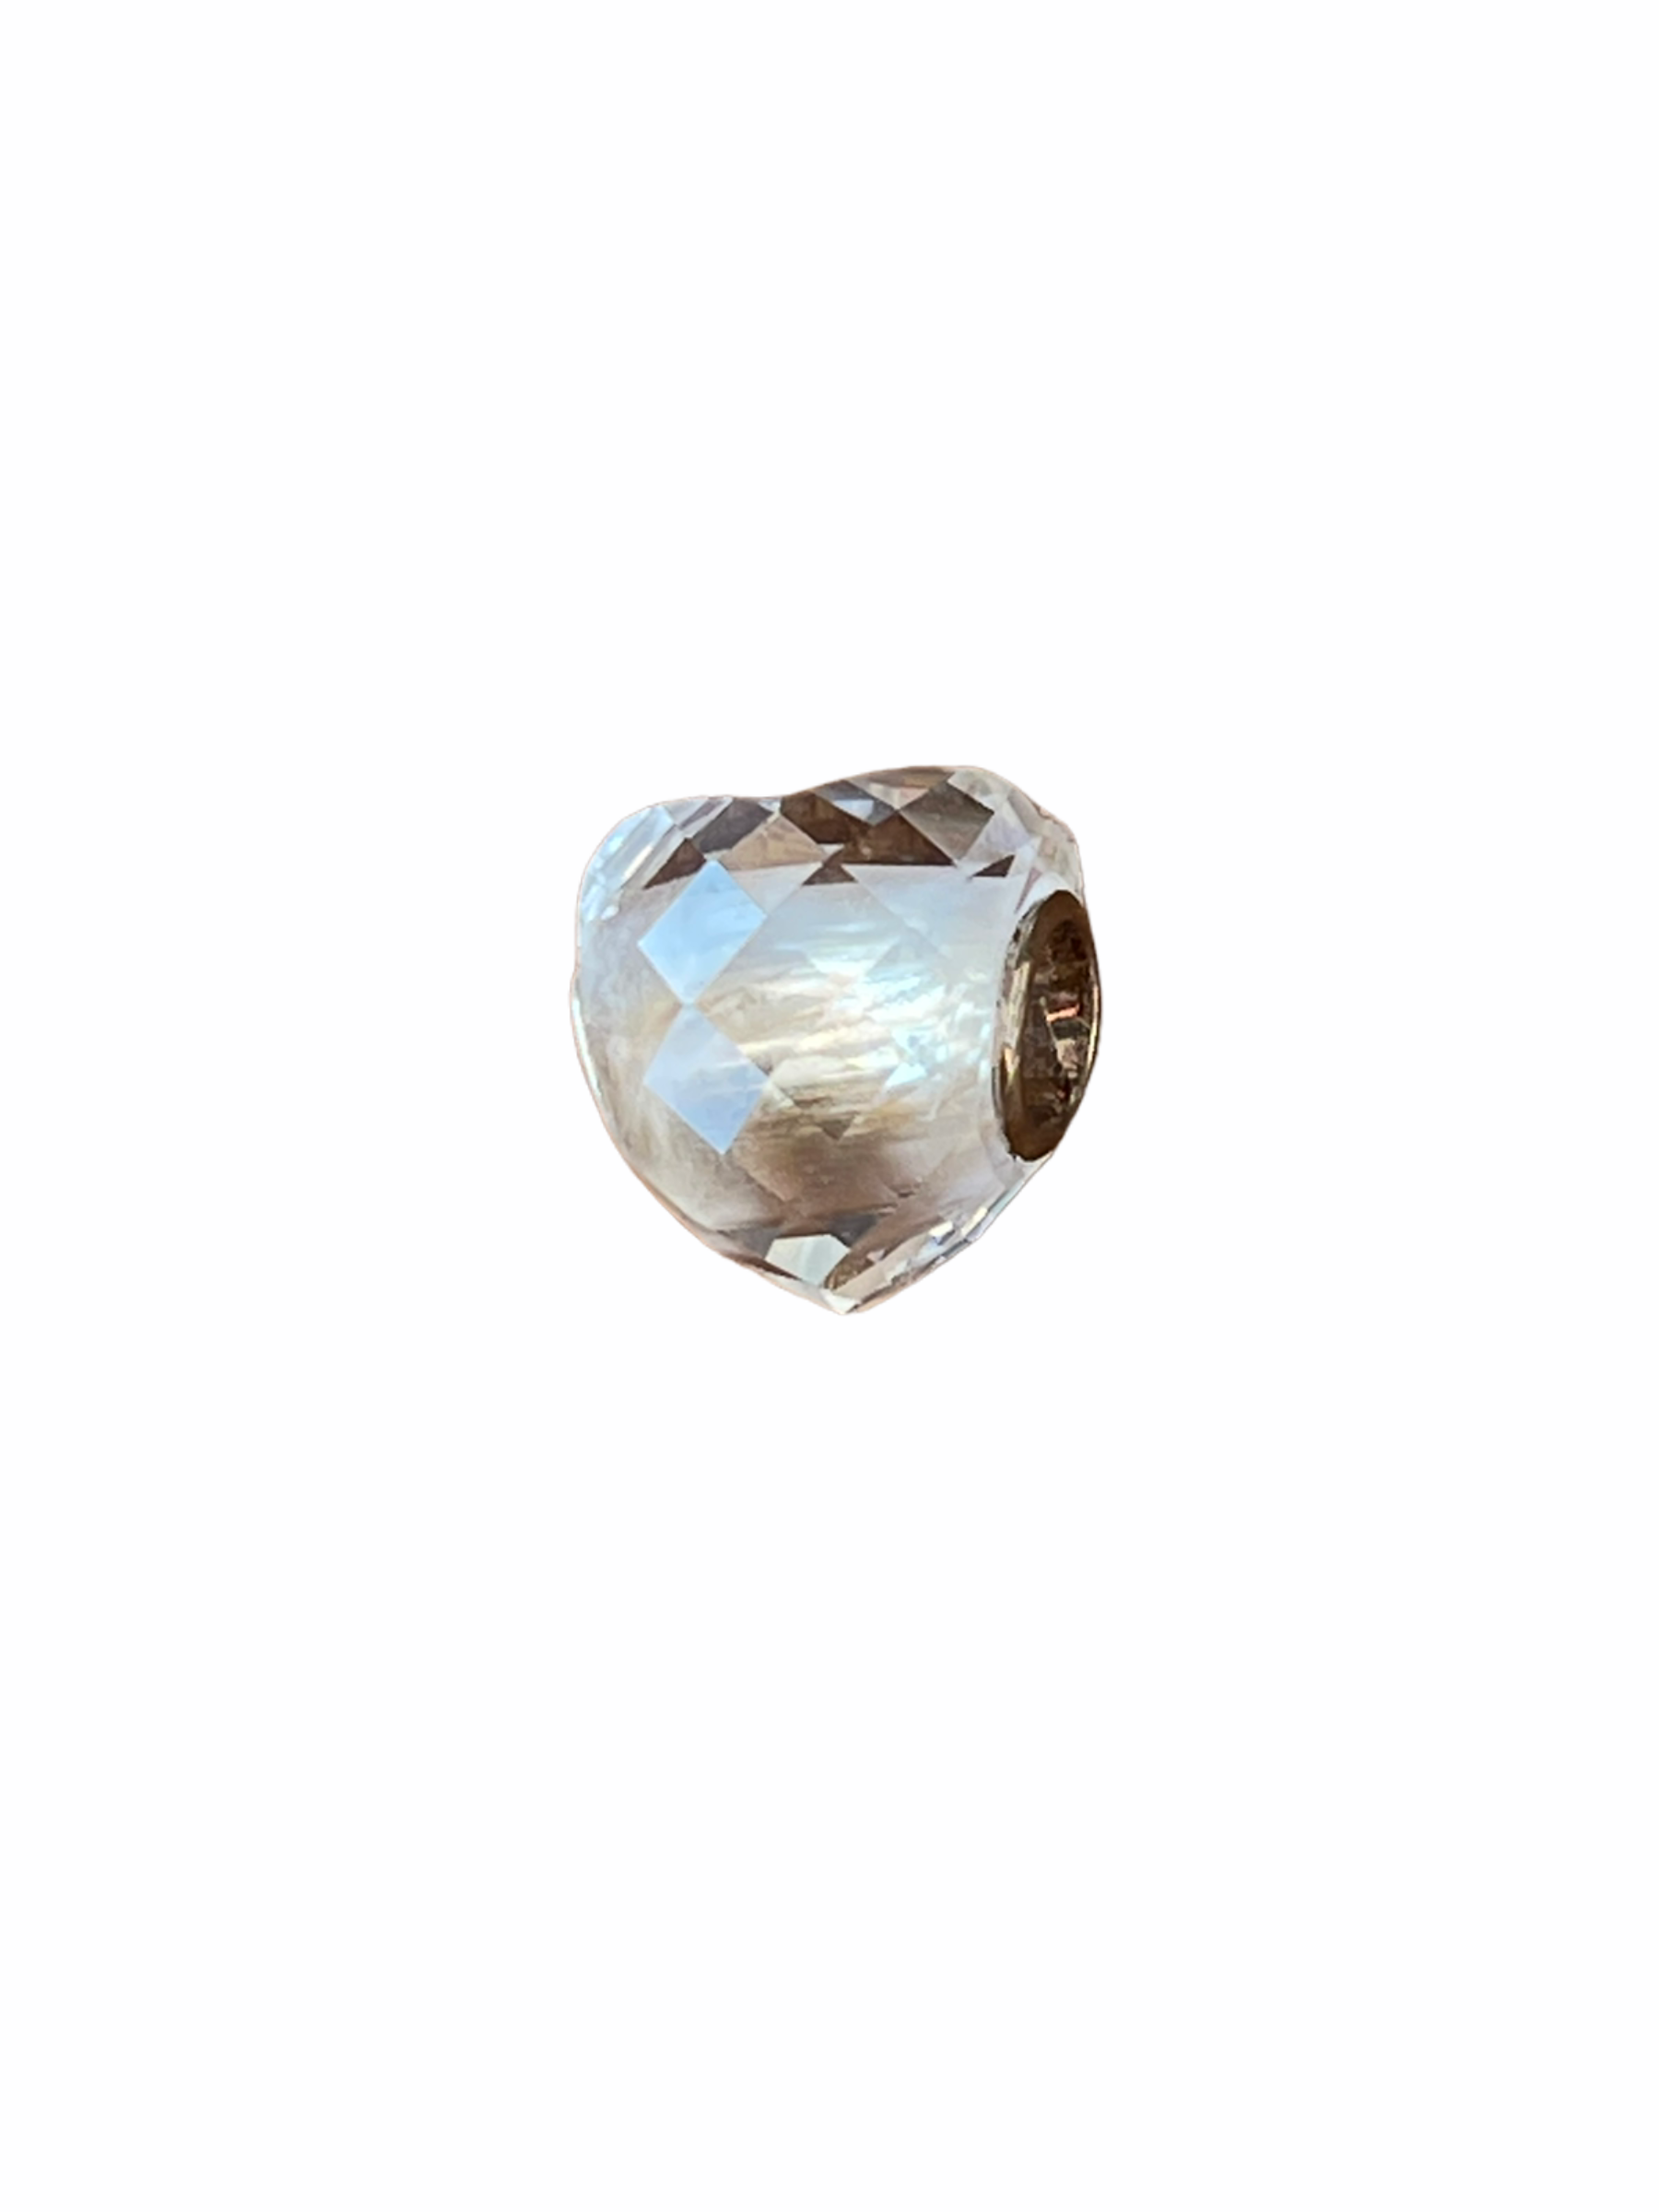 Clear Quartz Heart Bead Valkyrie Gems Beads 2